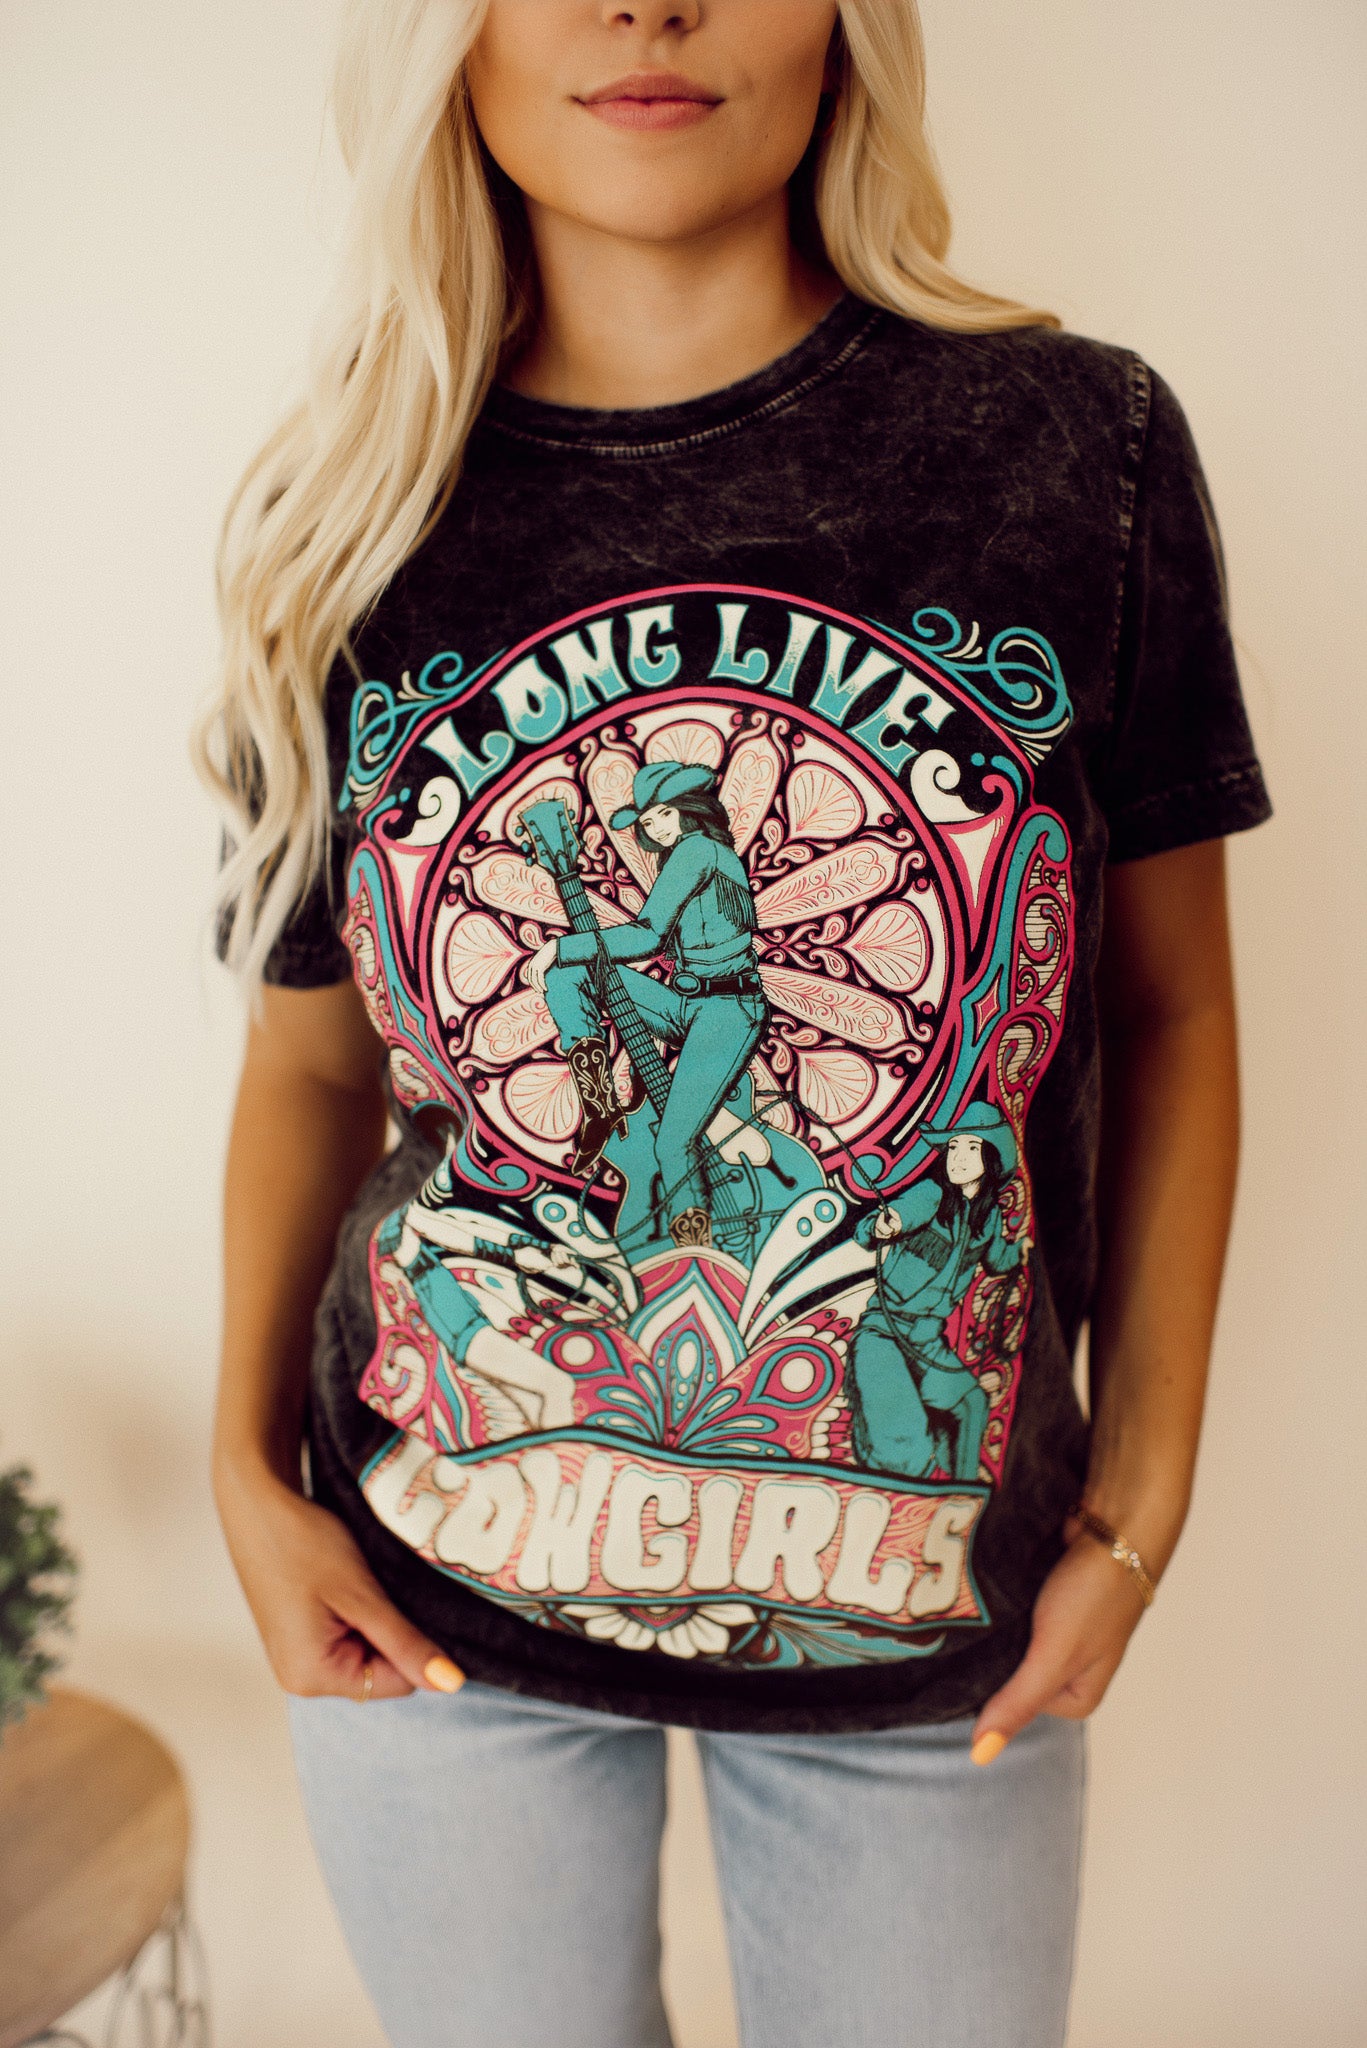 Long Live Cowgirls Tee Shirt (Charcoal)